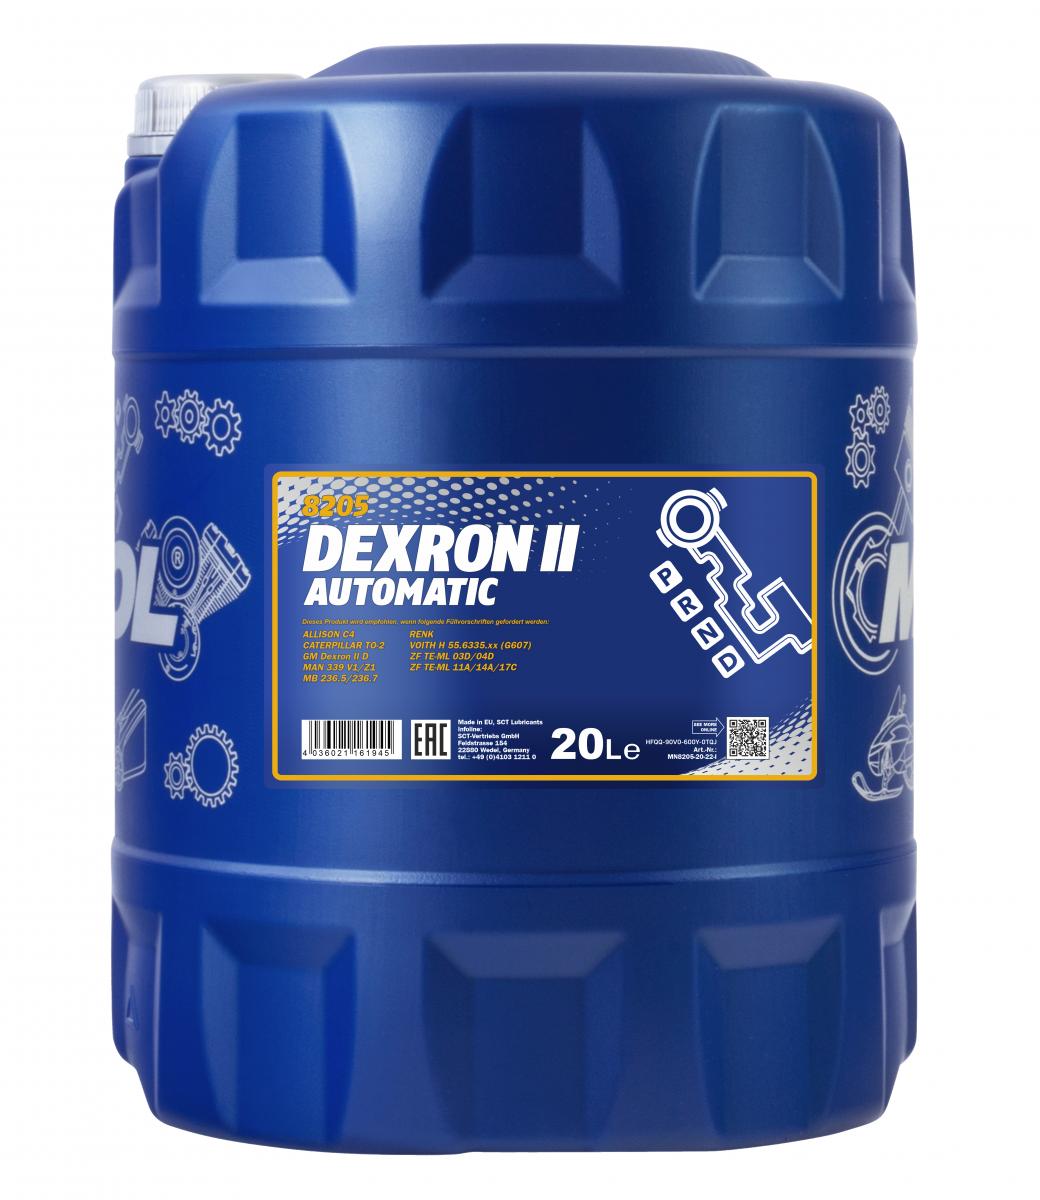 40 Liter MANNOL Dexron II Automatic Getriebeöl Automatikgetriebe Öl